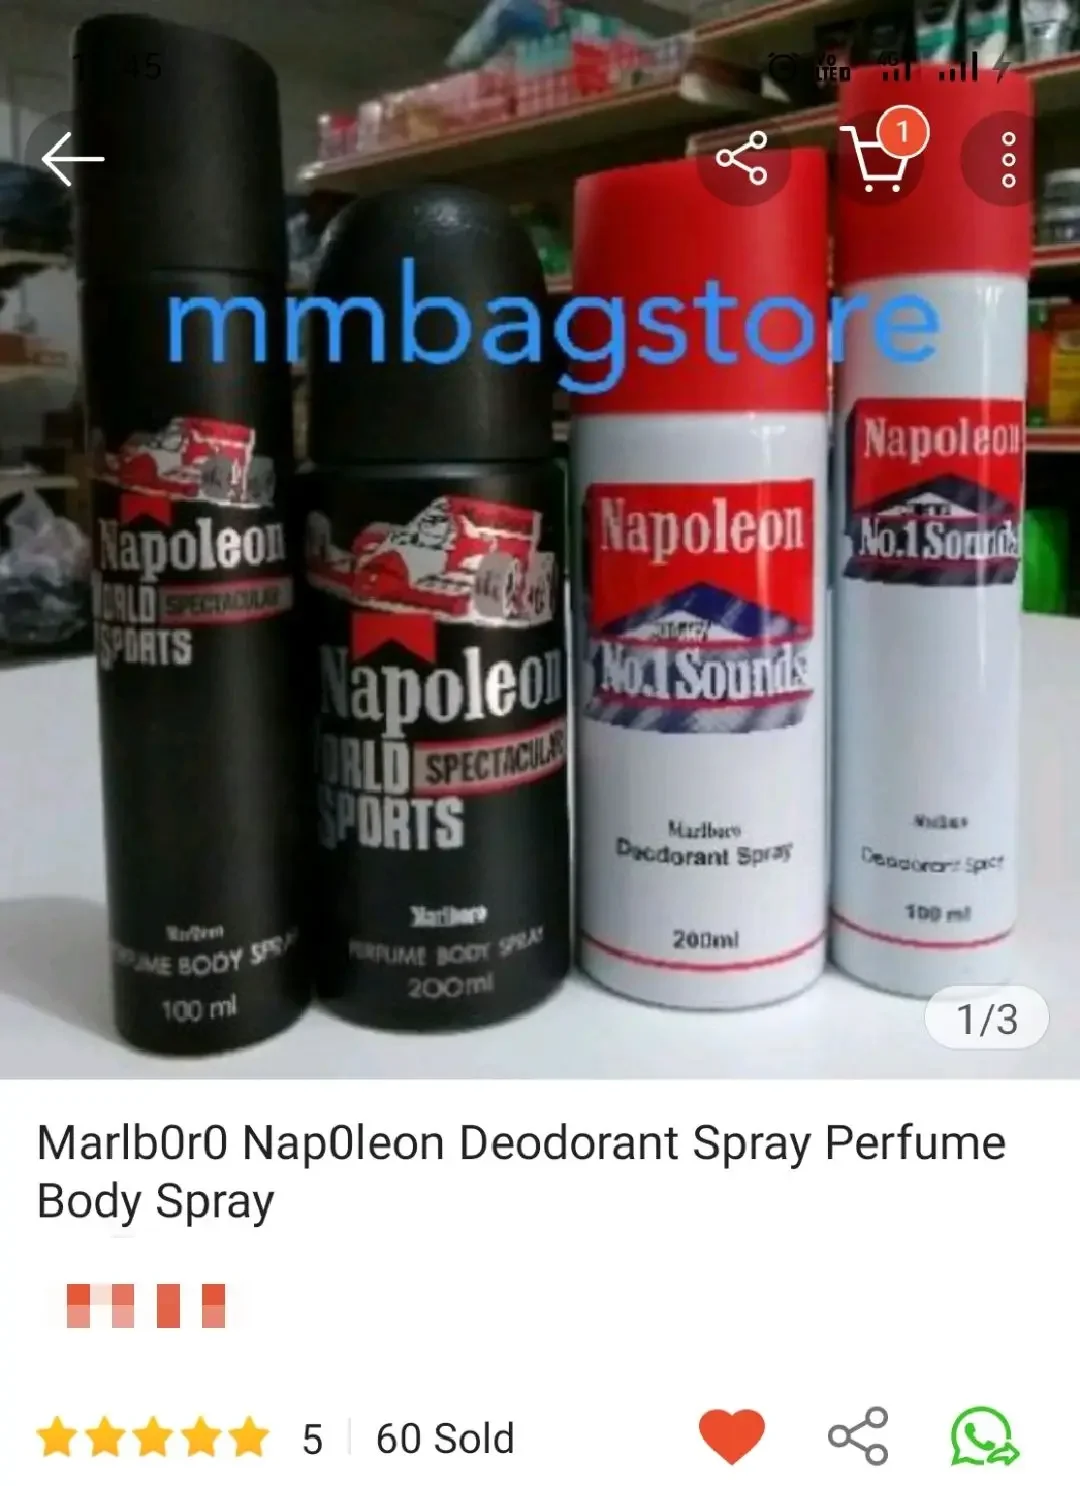 Marlbor0 Napoleon Deodorant Spray Perfume Body Spray 200ml